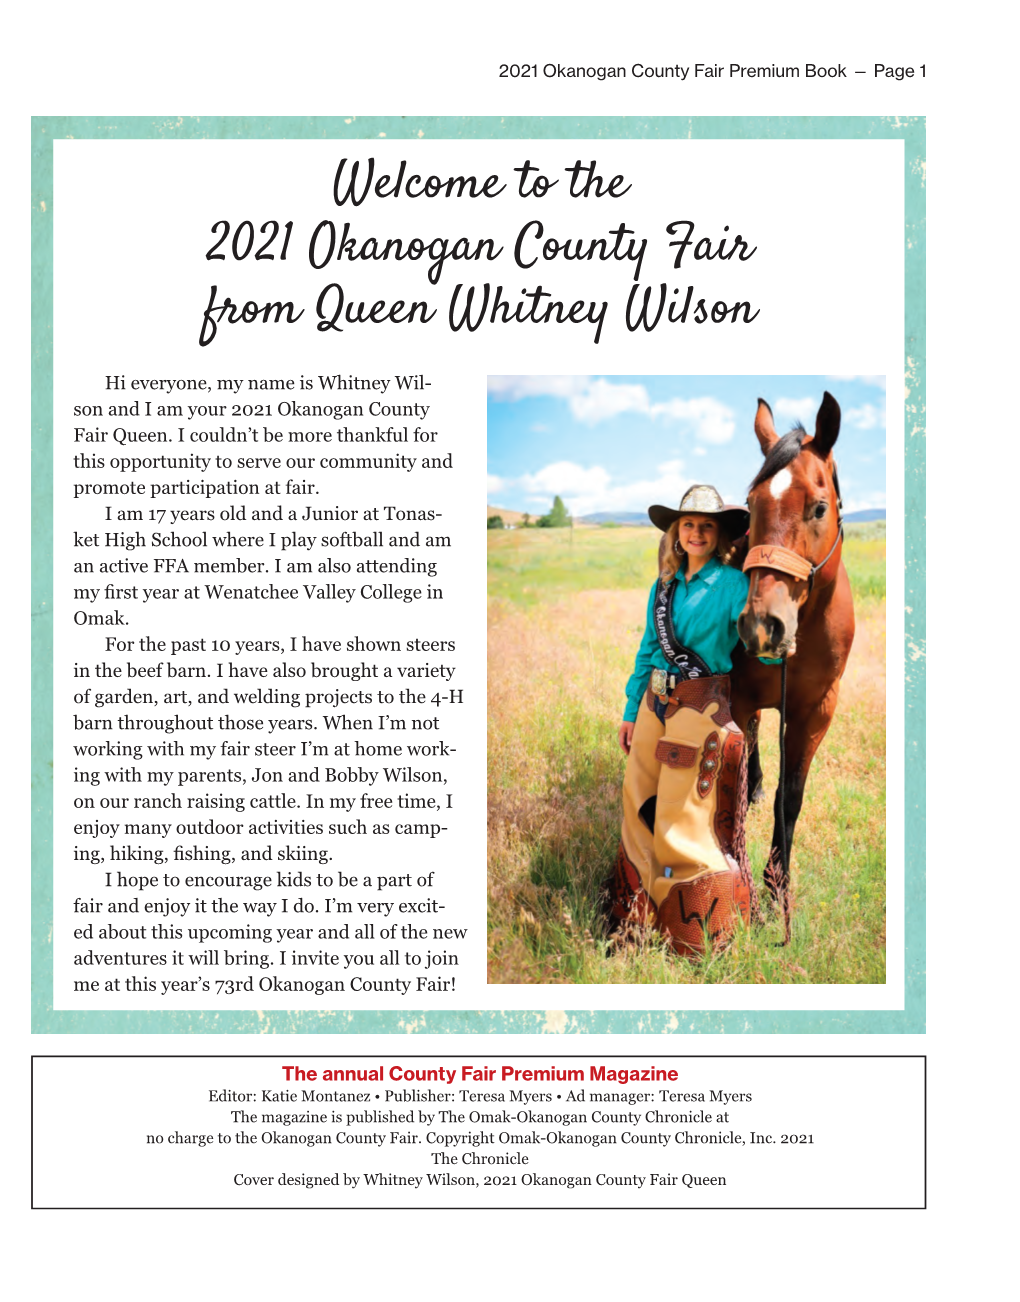 The 2021 Okanogan County Fair from Queen Whitney Wilson